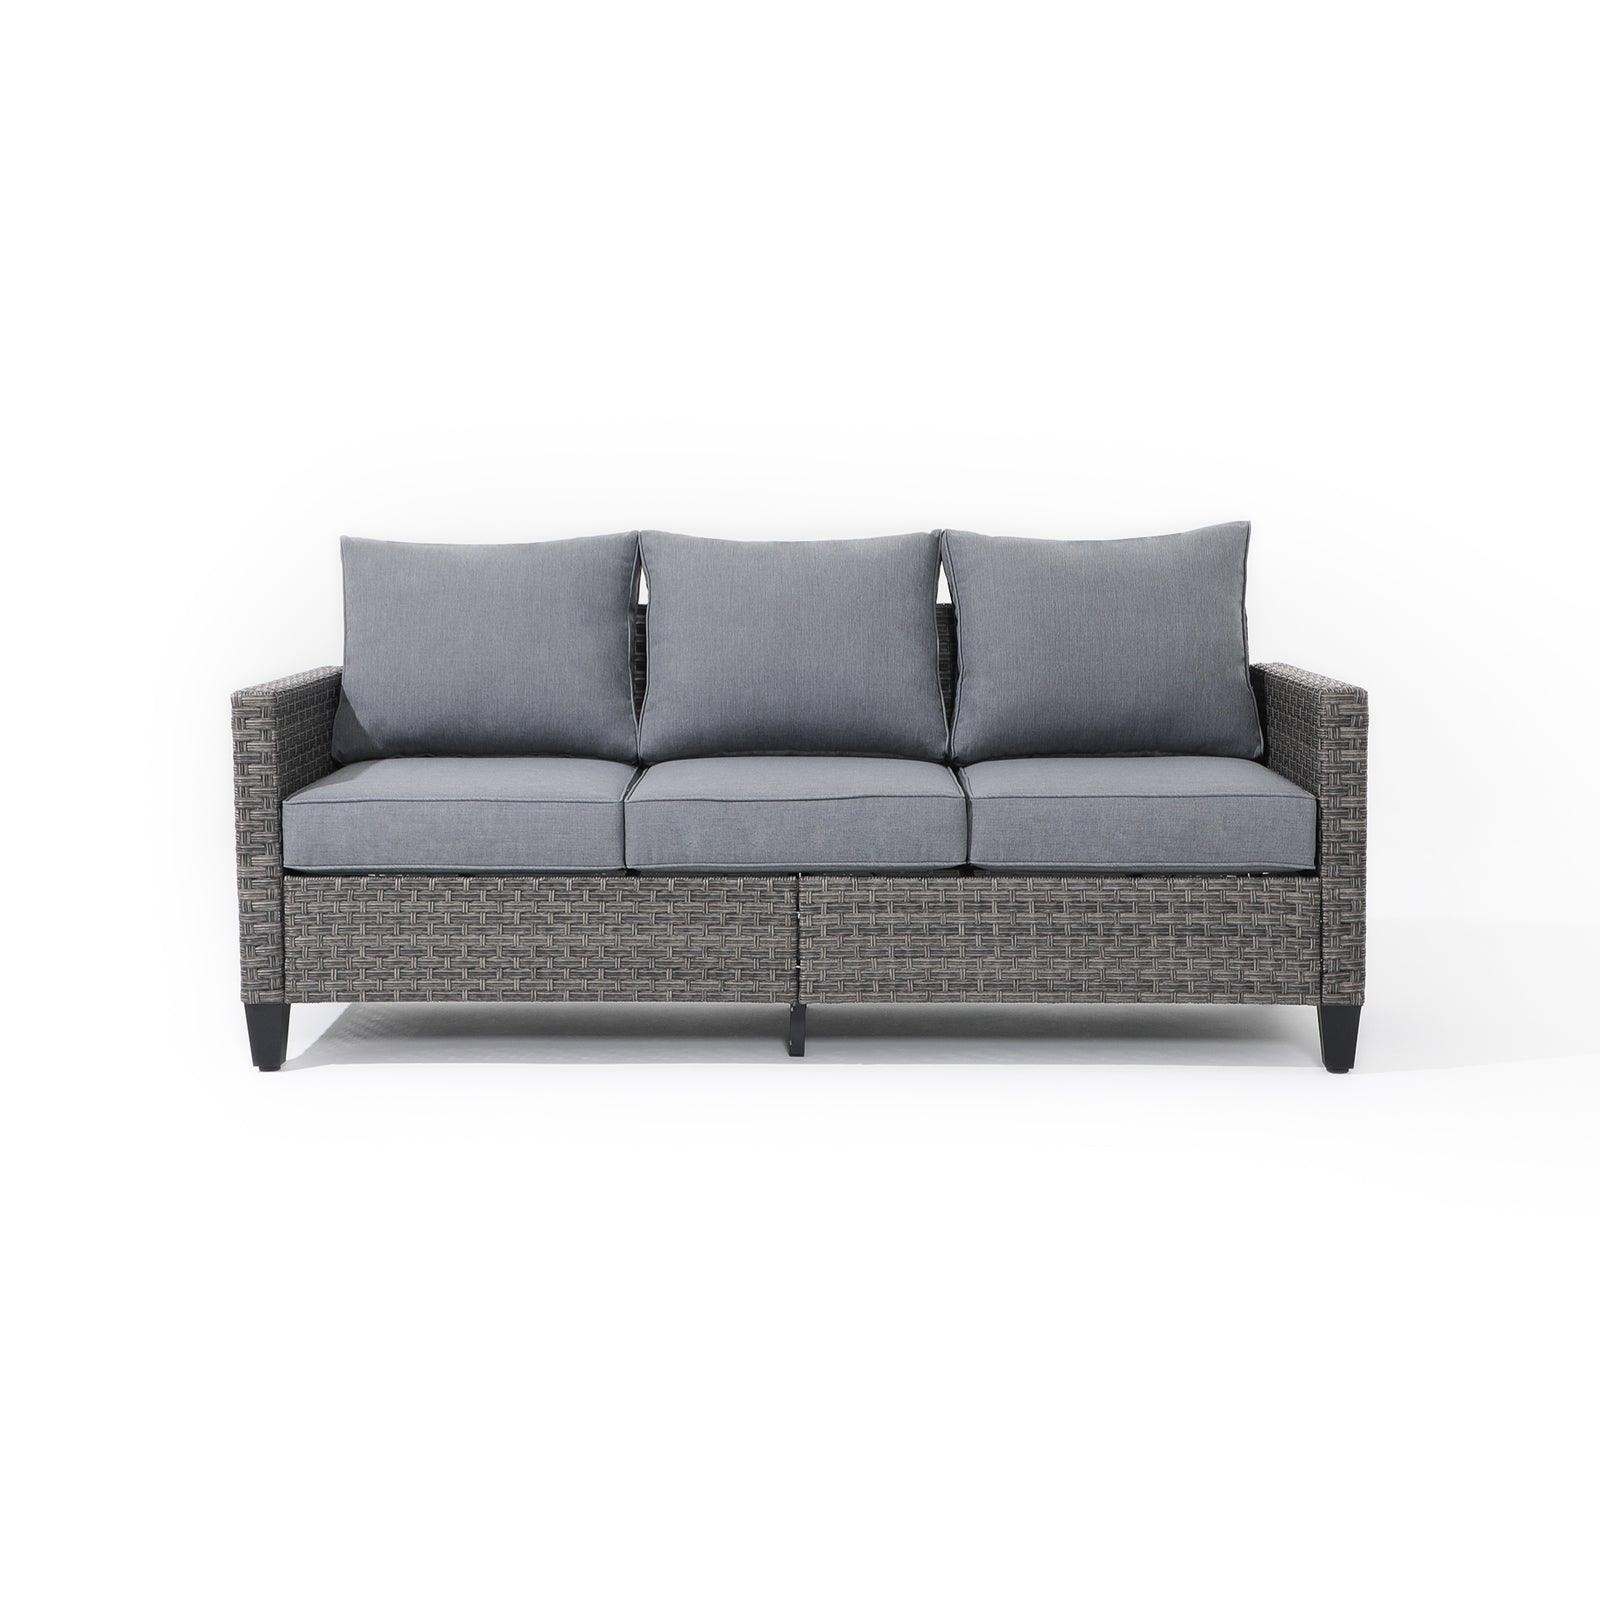 Modern HDPE Wicker Outdoor Furniture, Ayia outdoor sofa with rattan design, grey cushions, three seats, Front view- Jardina Furniture #color_Grey